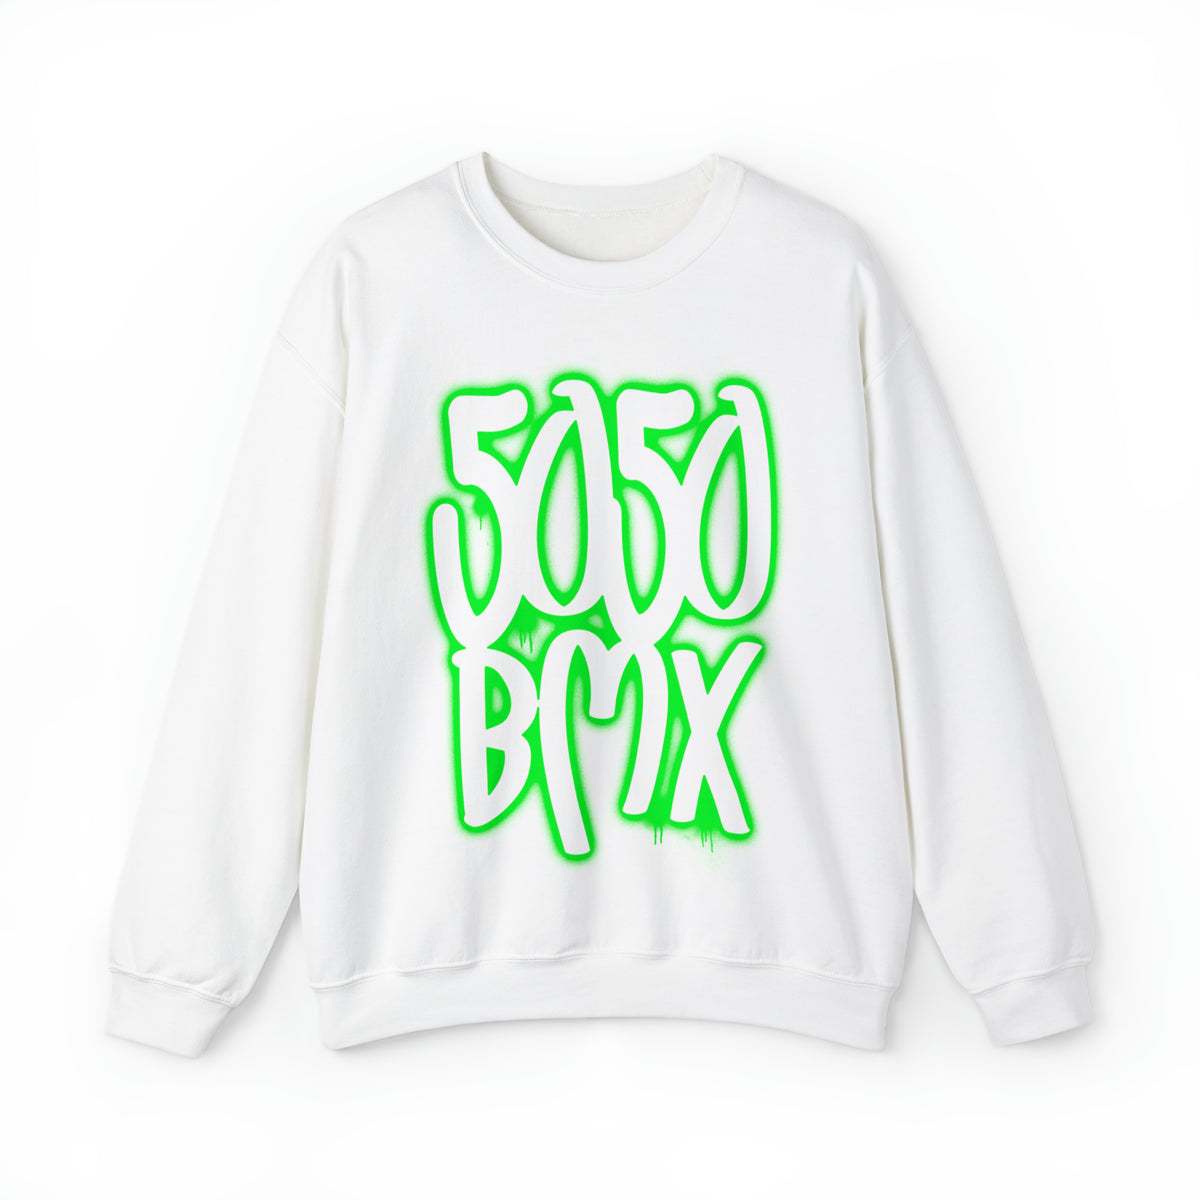 5050bmx Graffiti Crewneck Sweatshirt (Green)